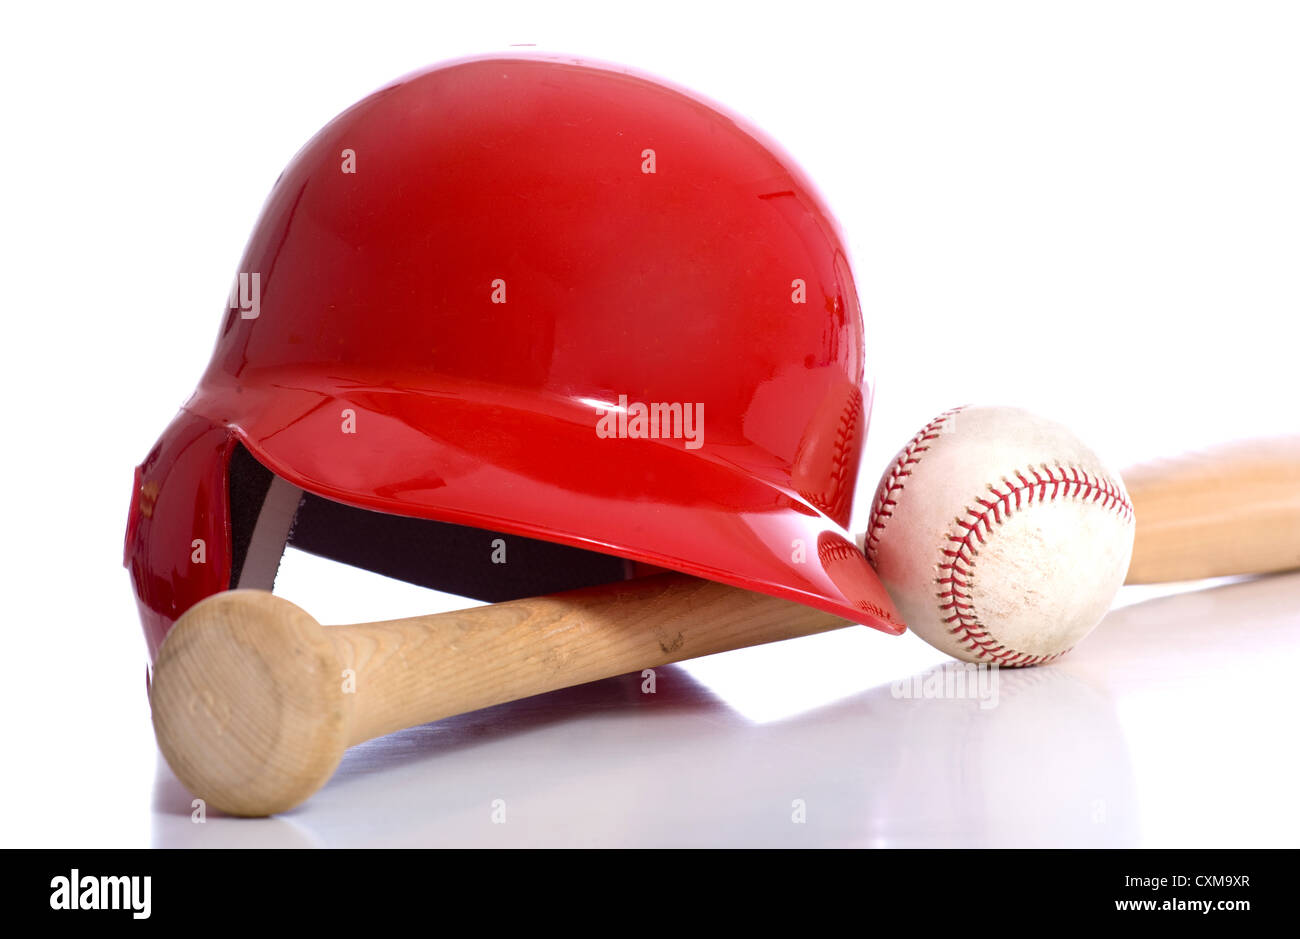 Baseball items on a white background including a batting helmet a wooden baseball bat and a baseball Stock Photo